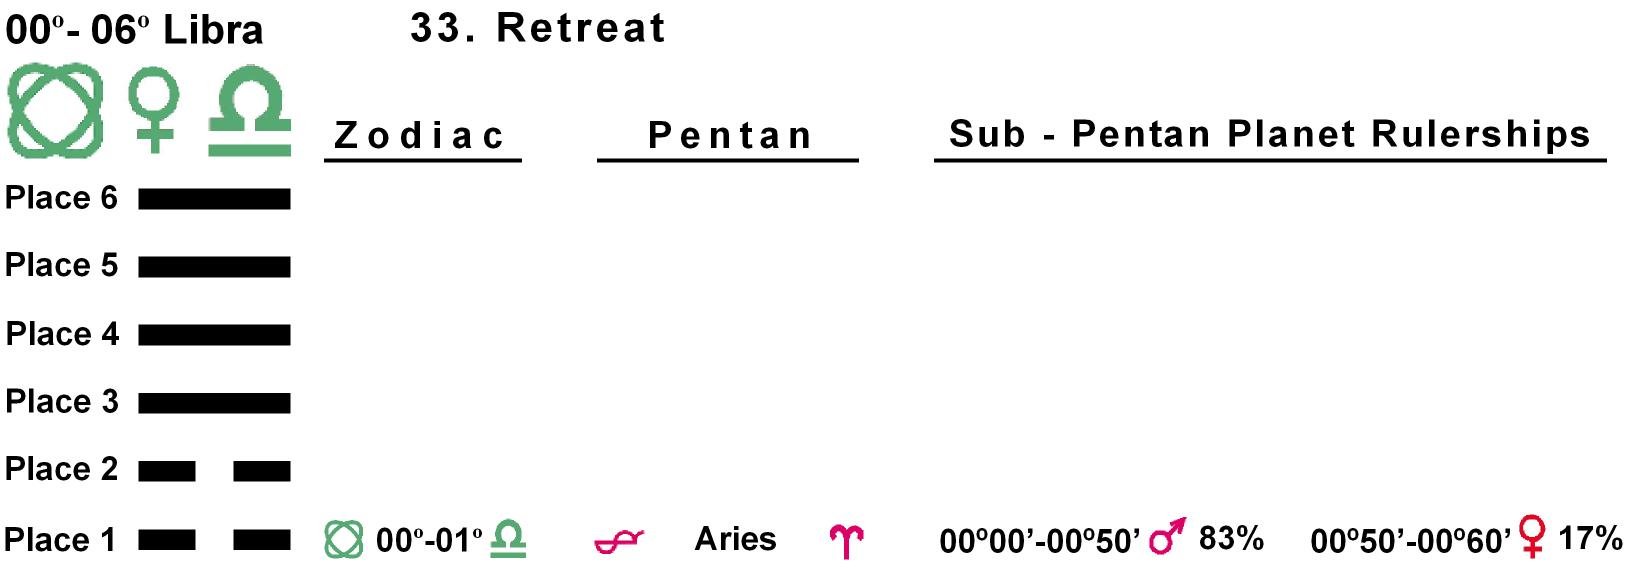 Pent-lines-07LI 00-01 Hx-33 Retreat